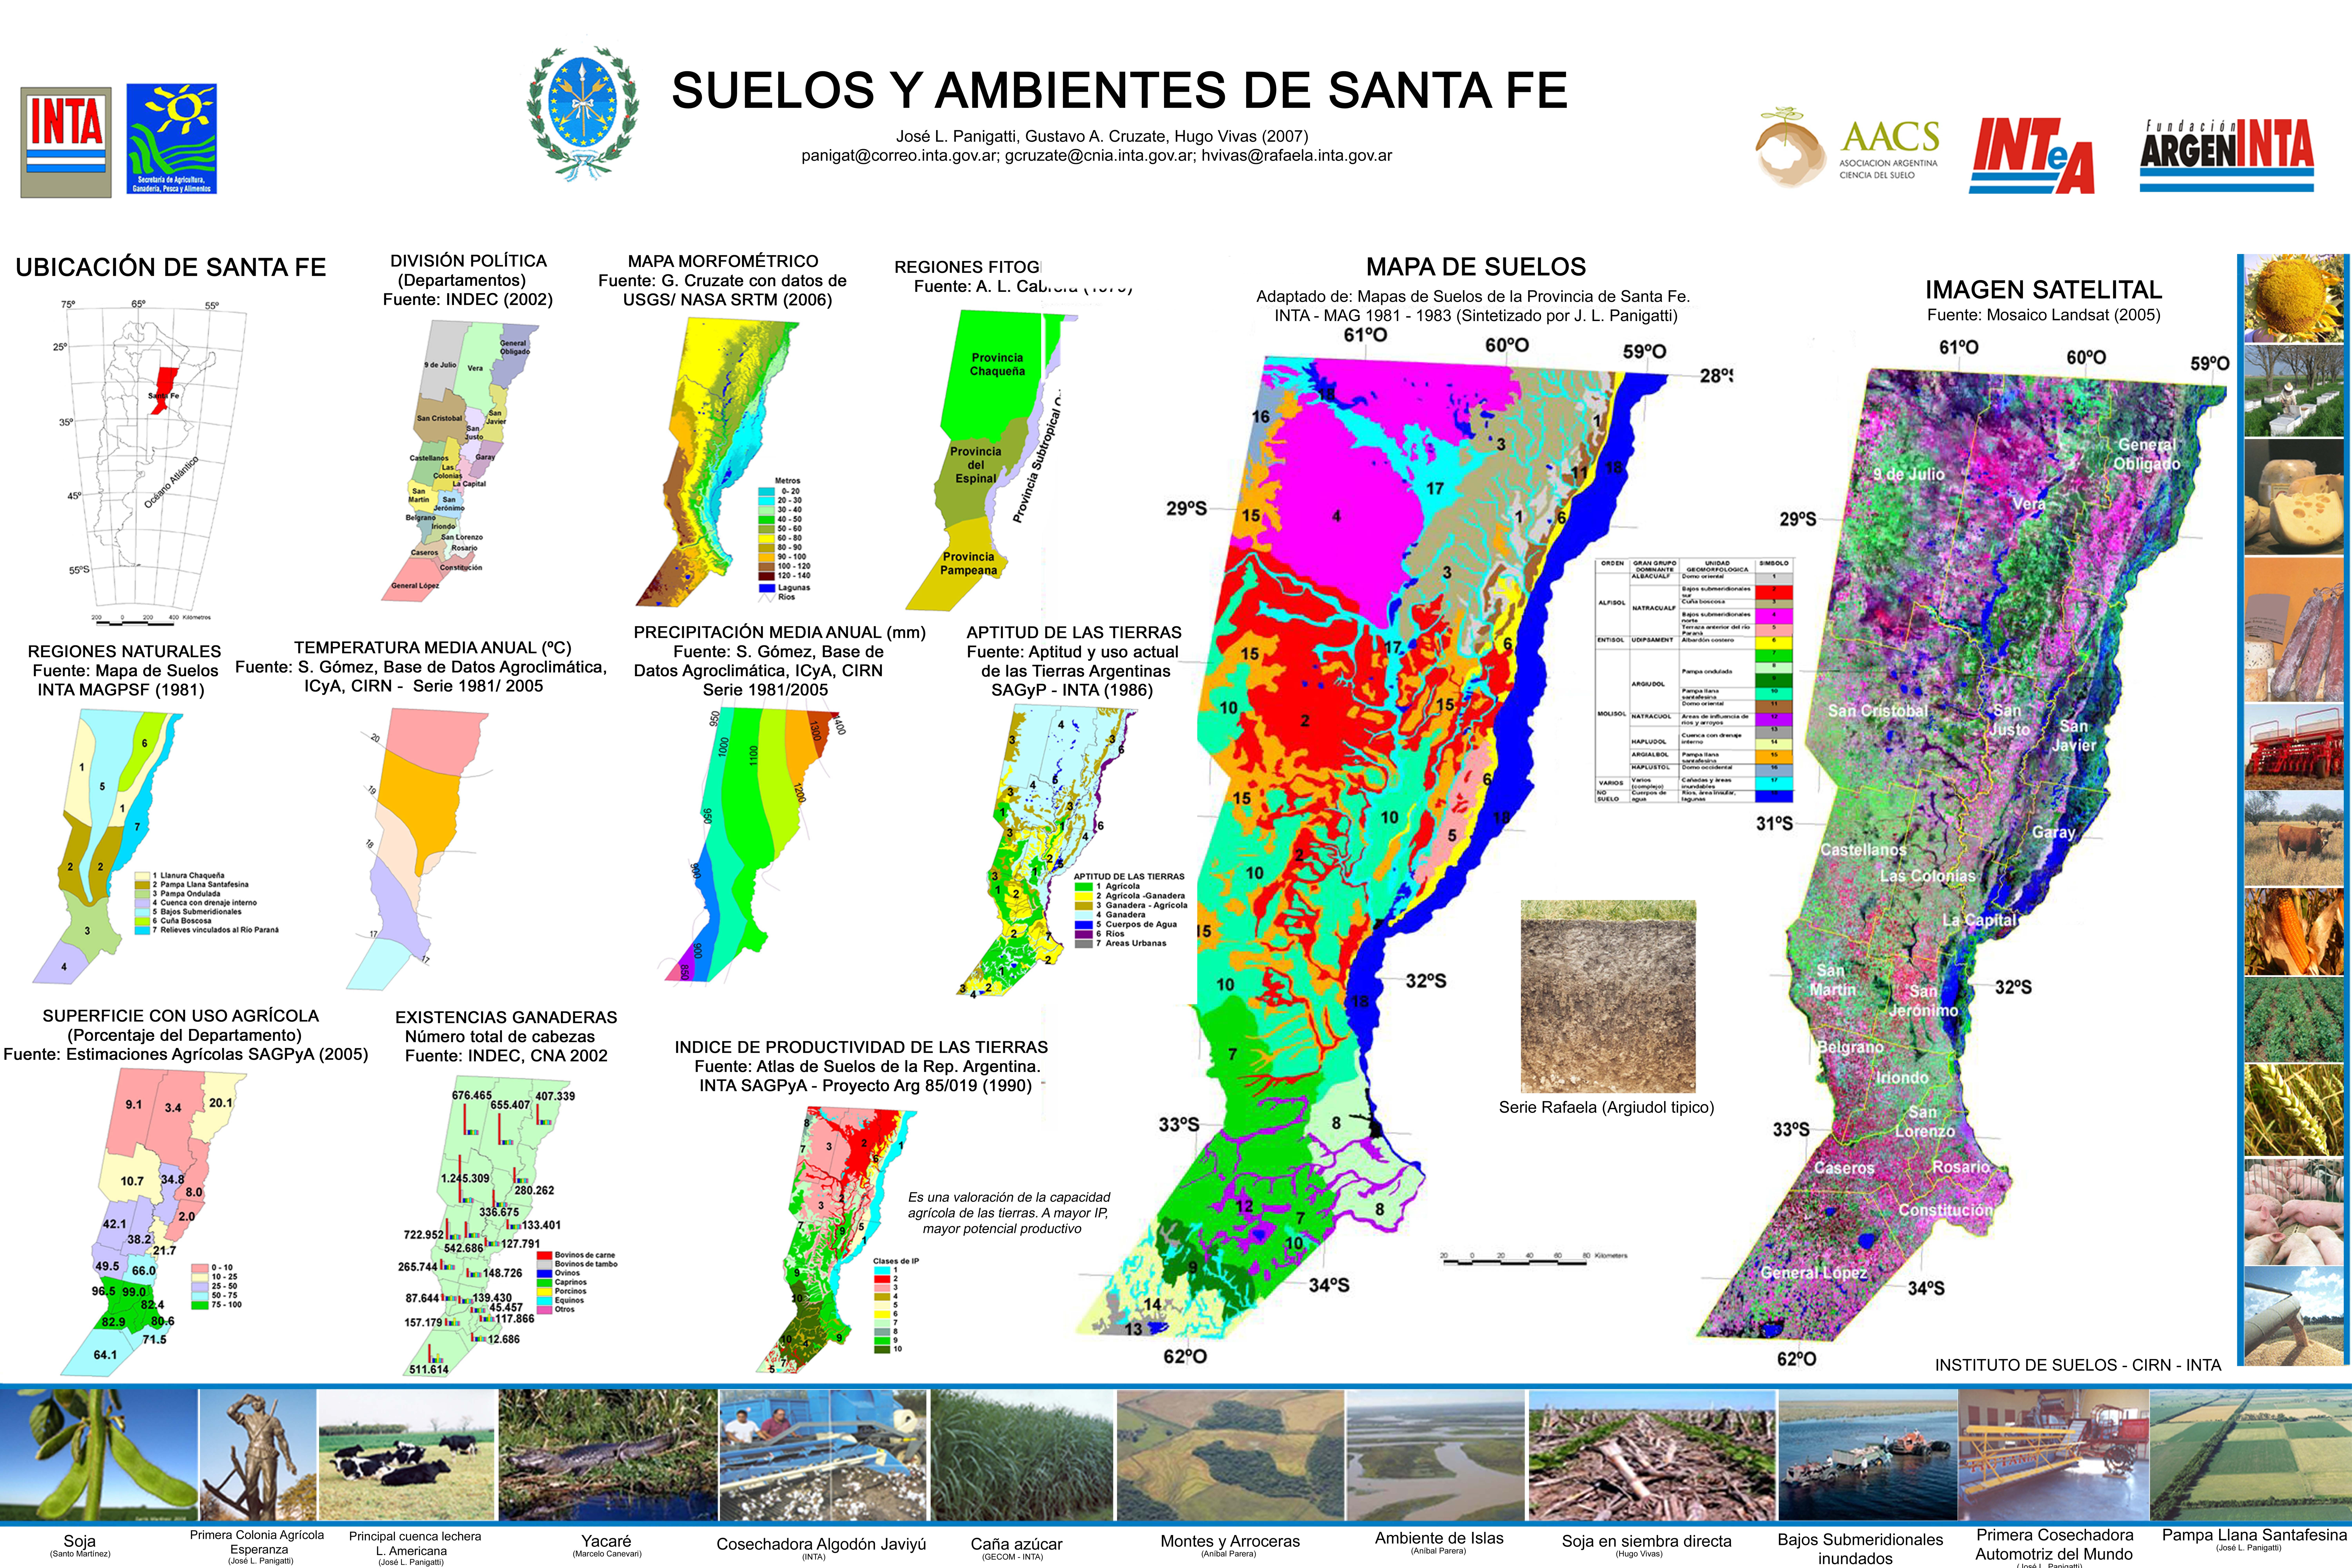 http://www.suelos.org.ar/img/posters_panigatti/mapa_santafe.jpg